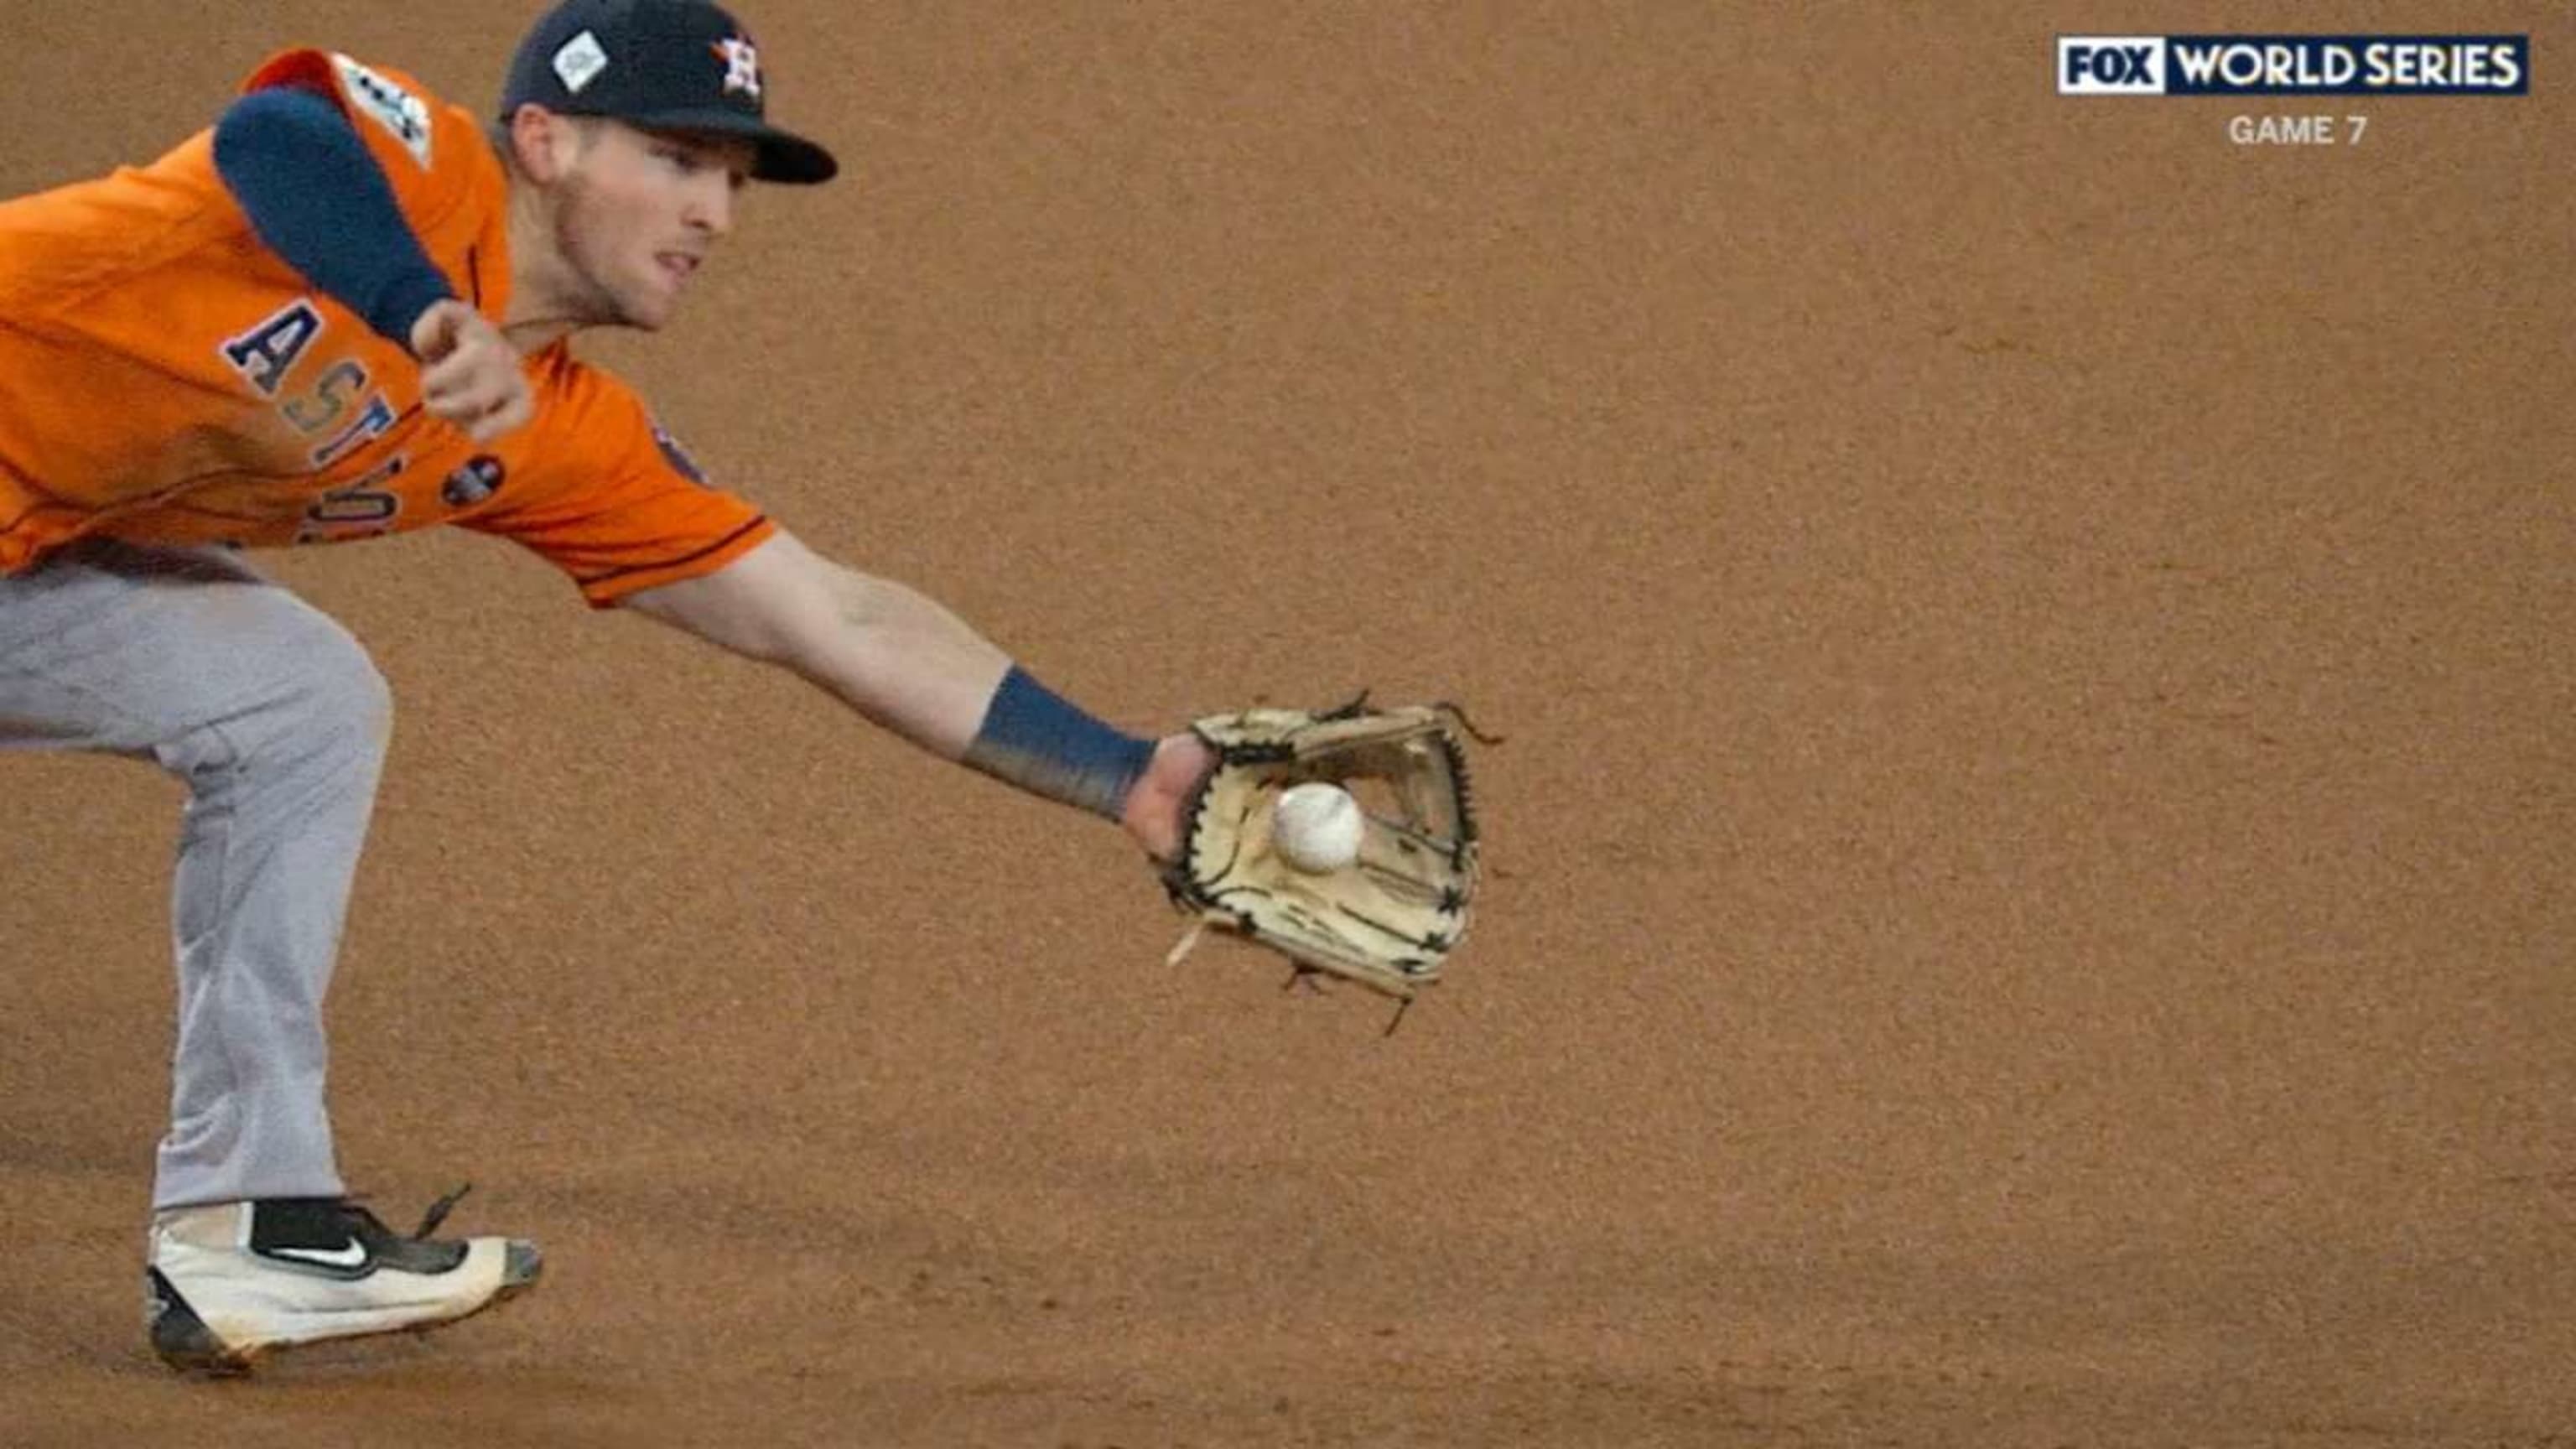 Houston Astros: Breaking down Alex Bregman's peculiar World Series diet